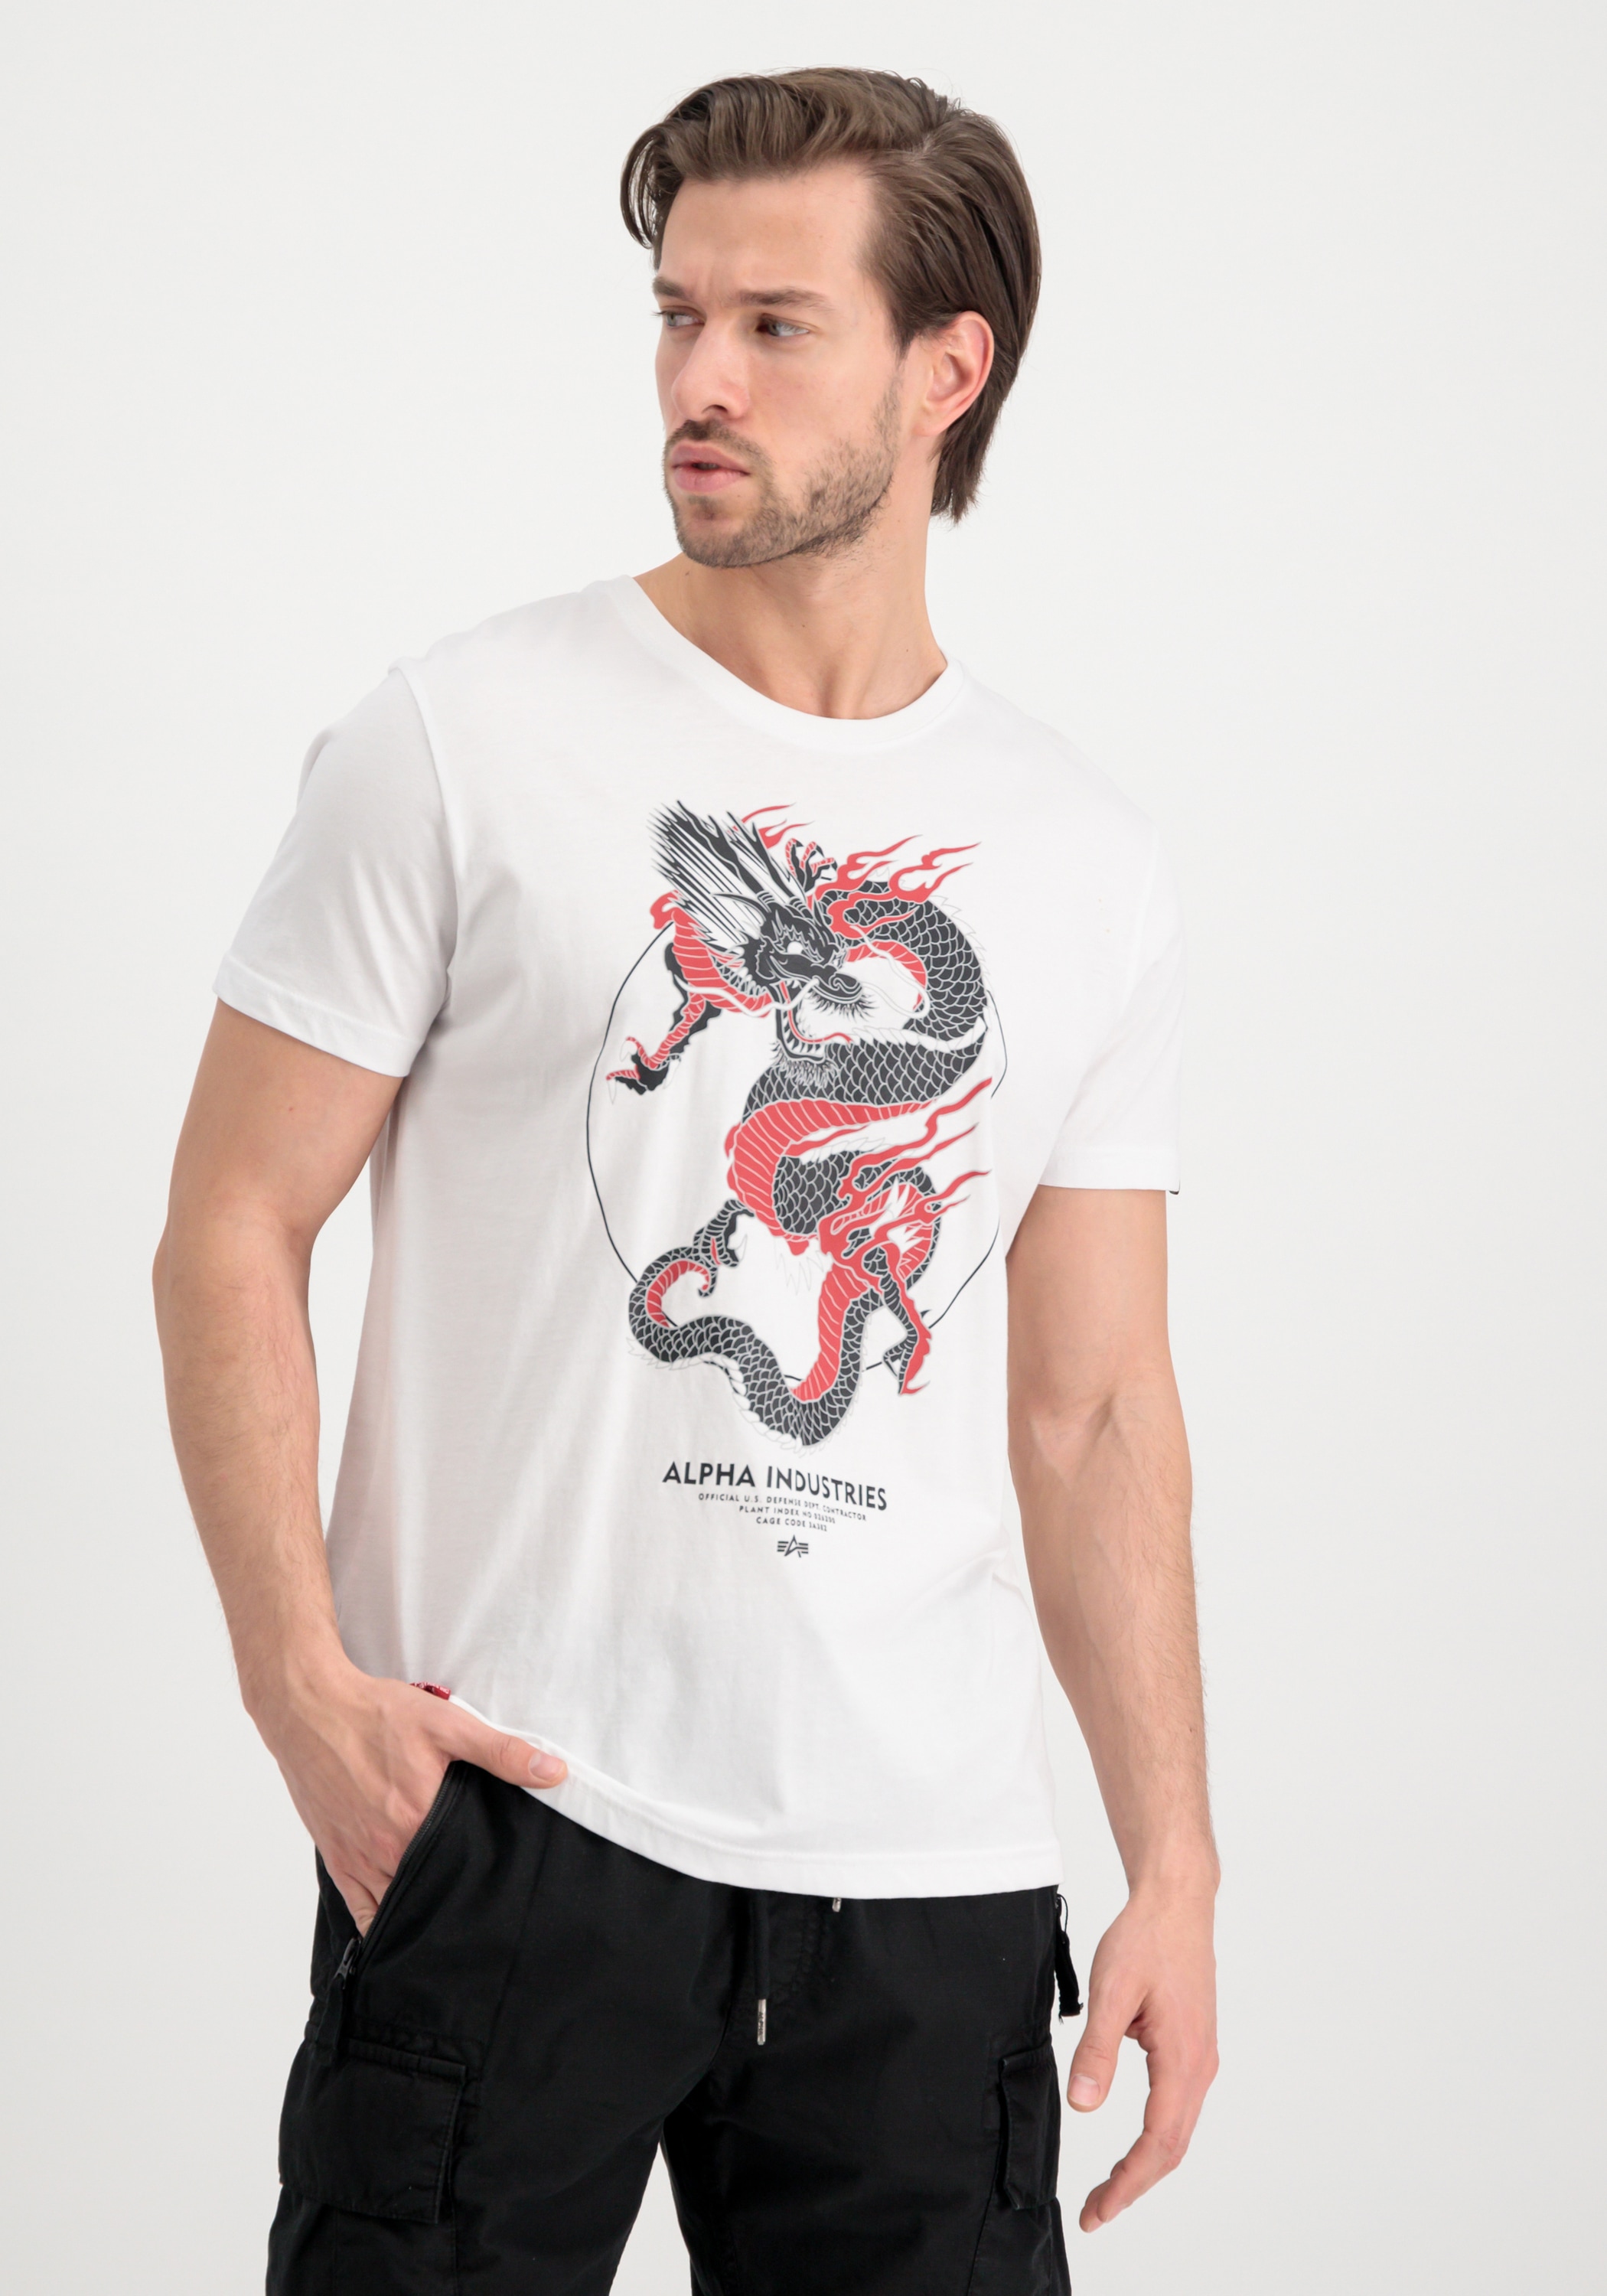 Industries T-Shirt Heritage online Men Dragon T-Shirts Industries bestellen »Alpha OTTO bei T« - Alpha